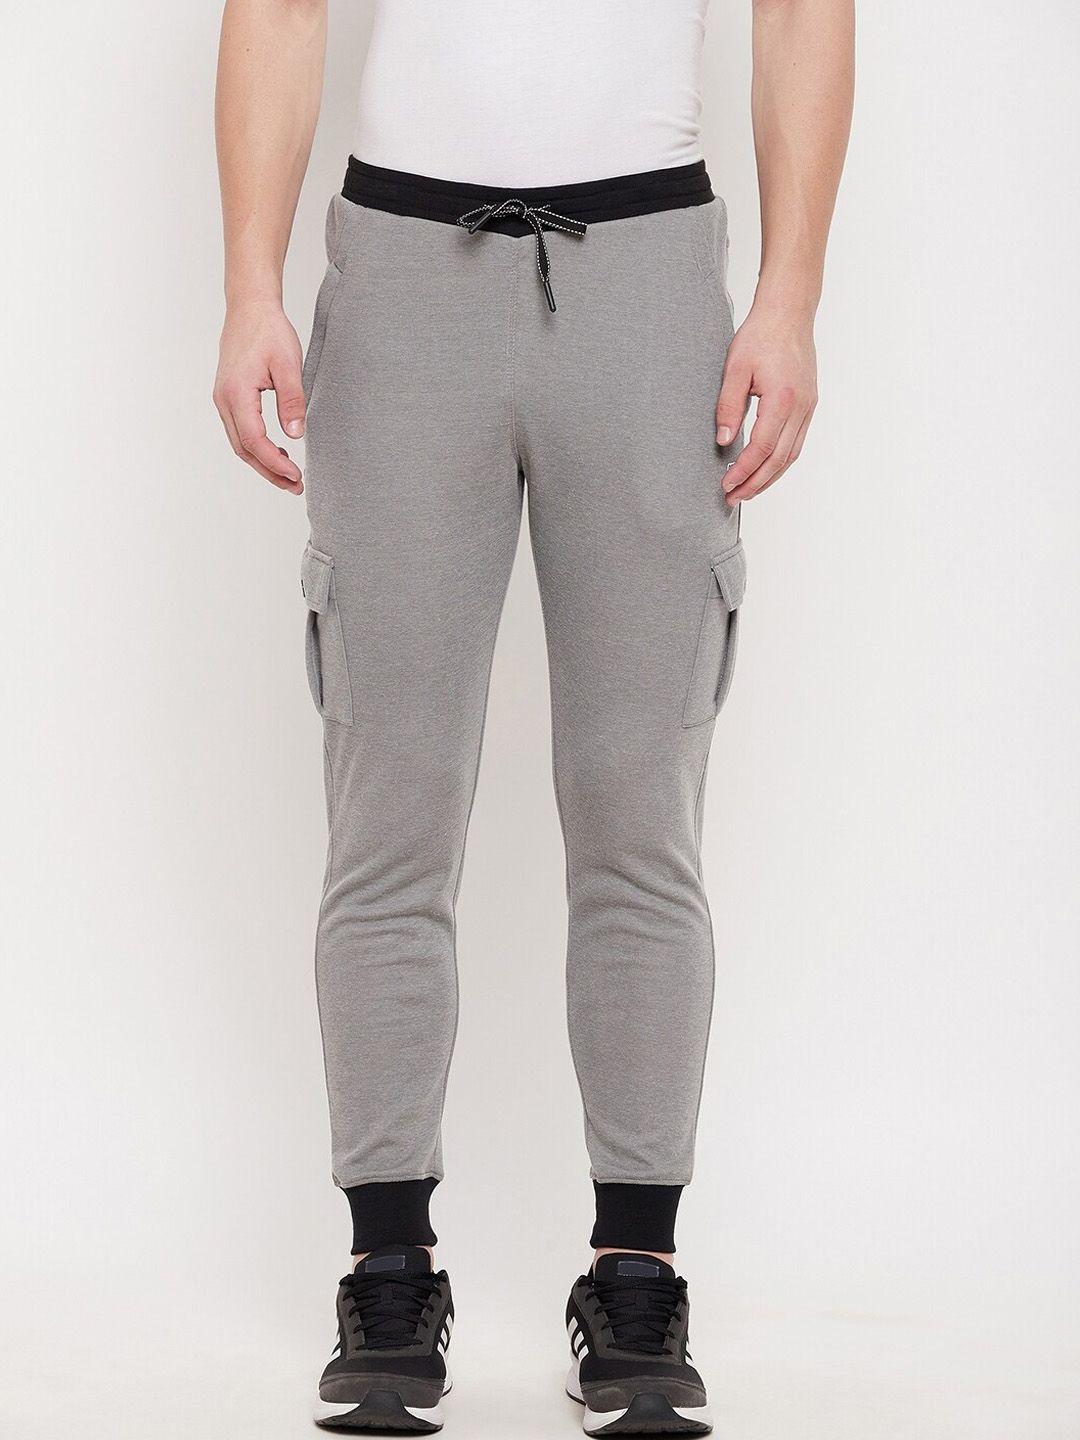 duke men grey solid regular-fit pure cotton joggers track pants